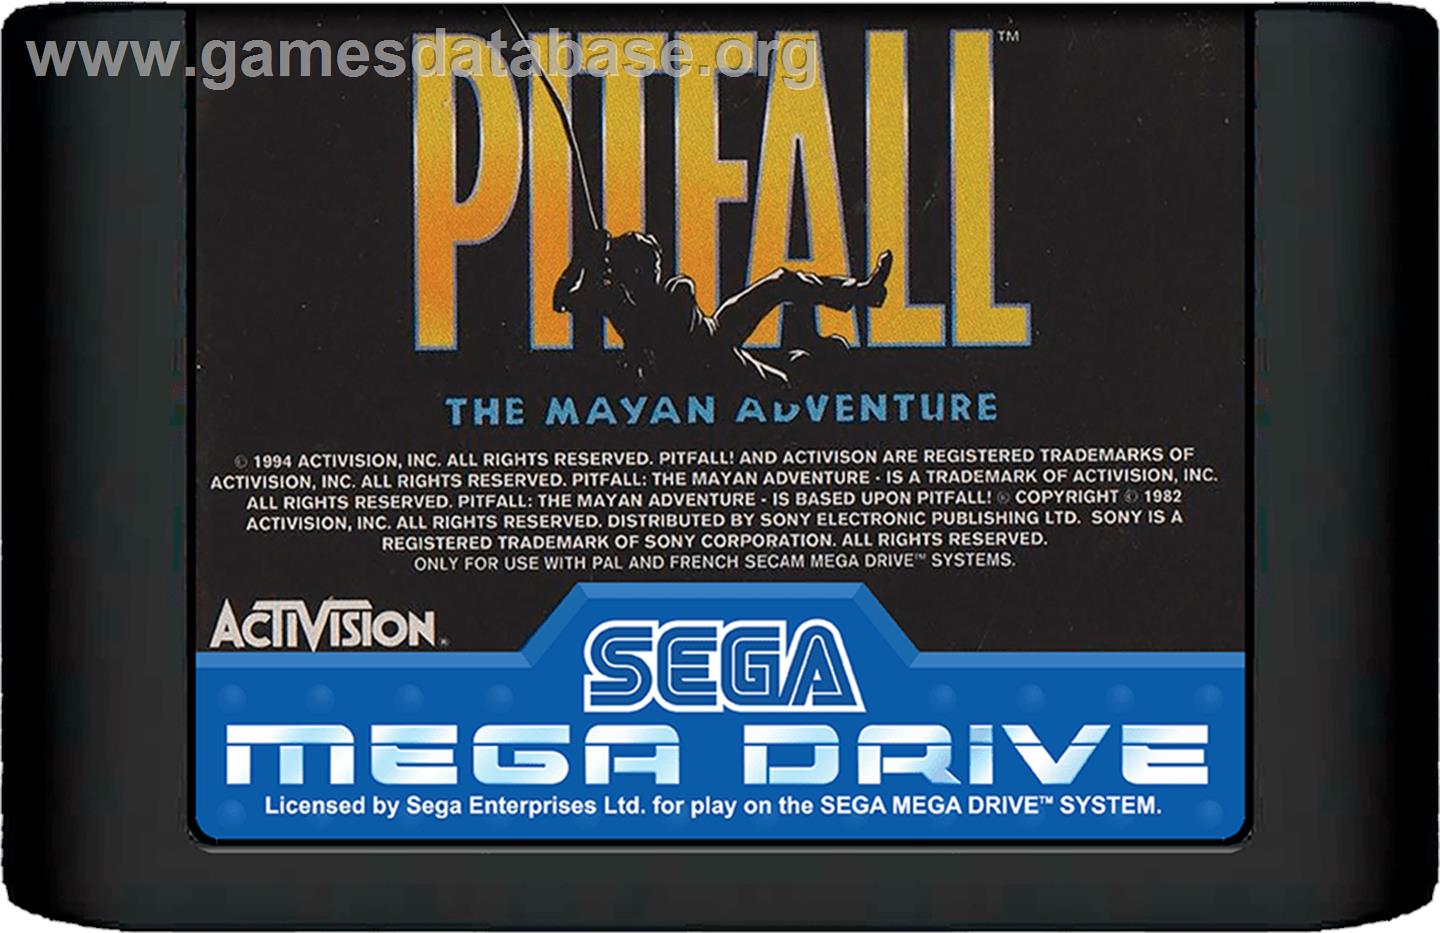 Pitfall: The Mayan Adventure - Sega Genesis - Artwork - Cartridge